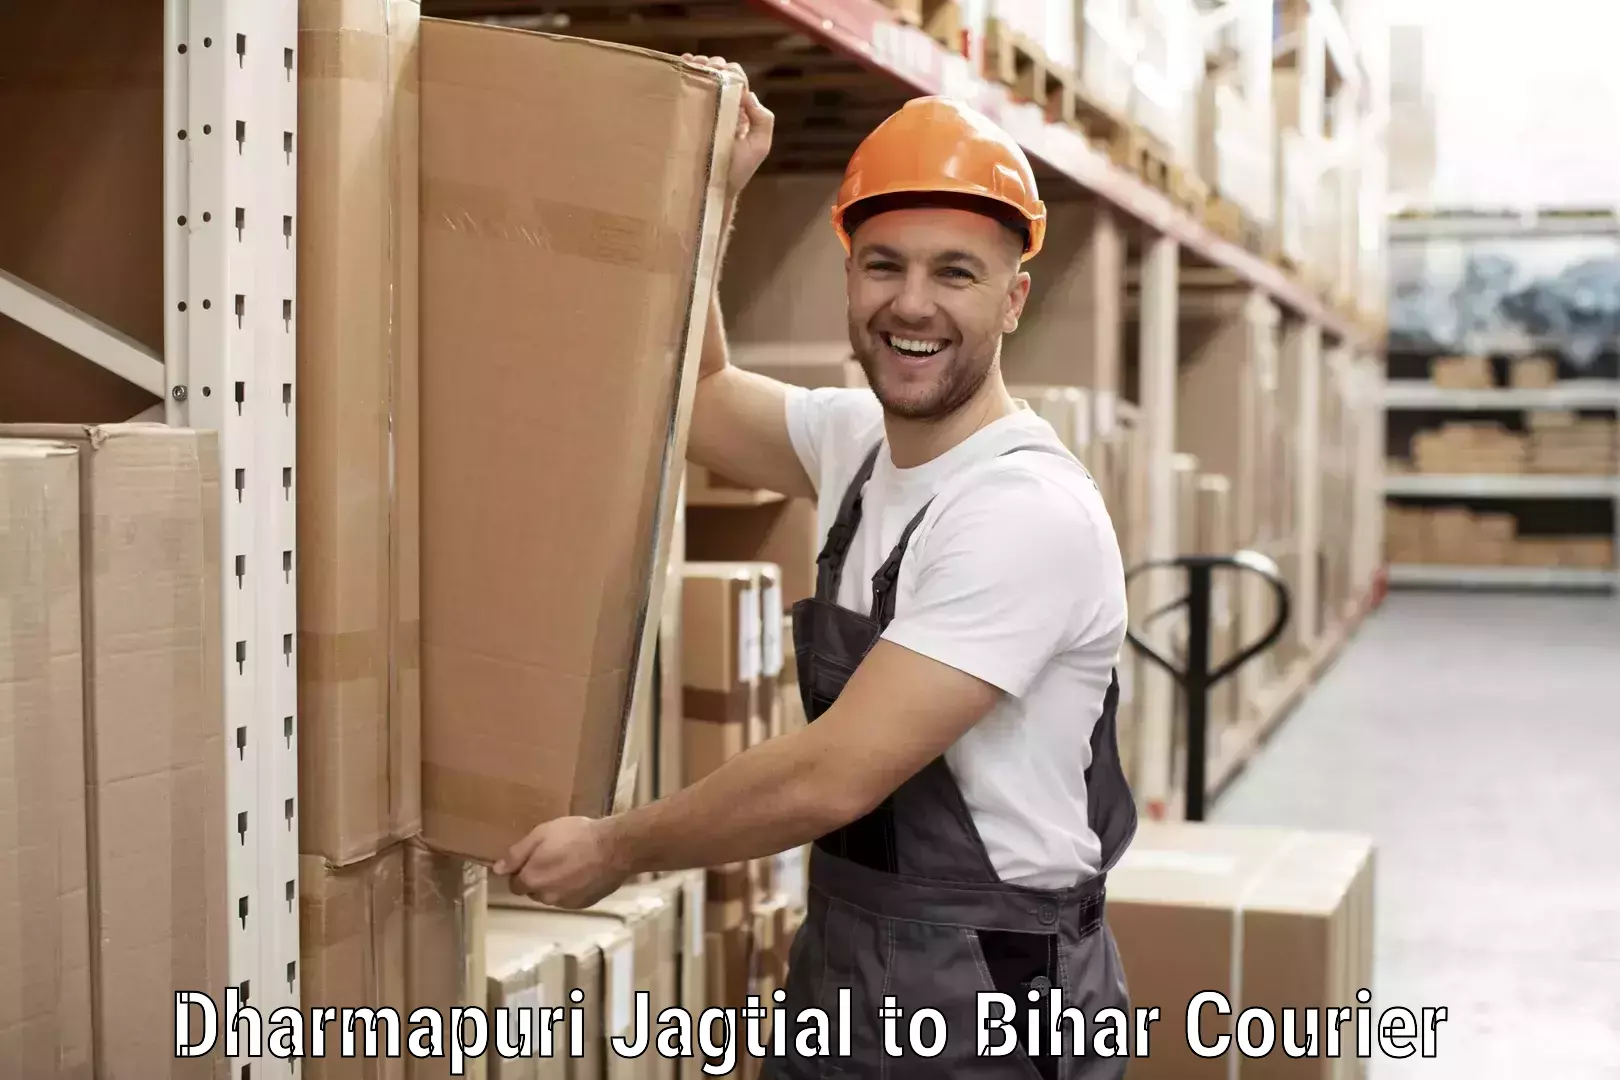 Business courier solutions Dharmapuri Jagtial to Bihar